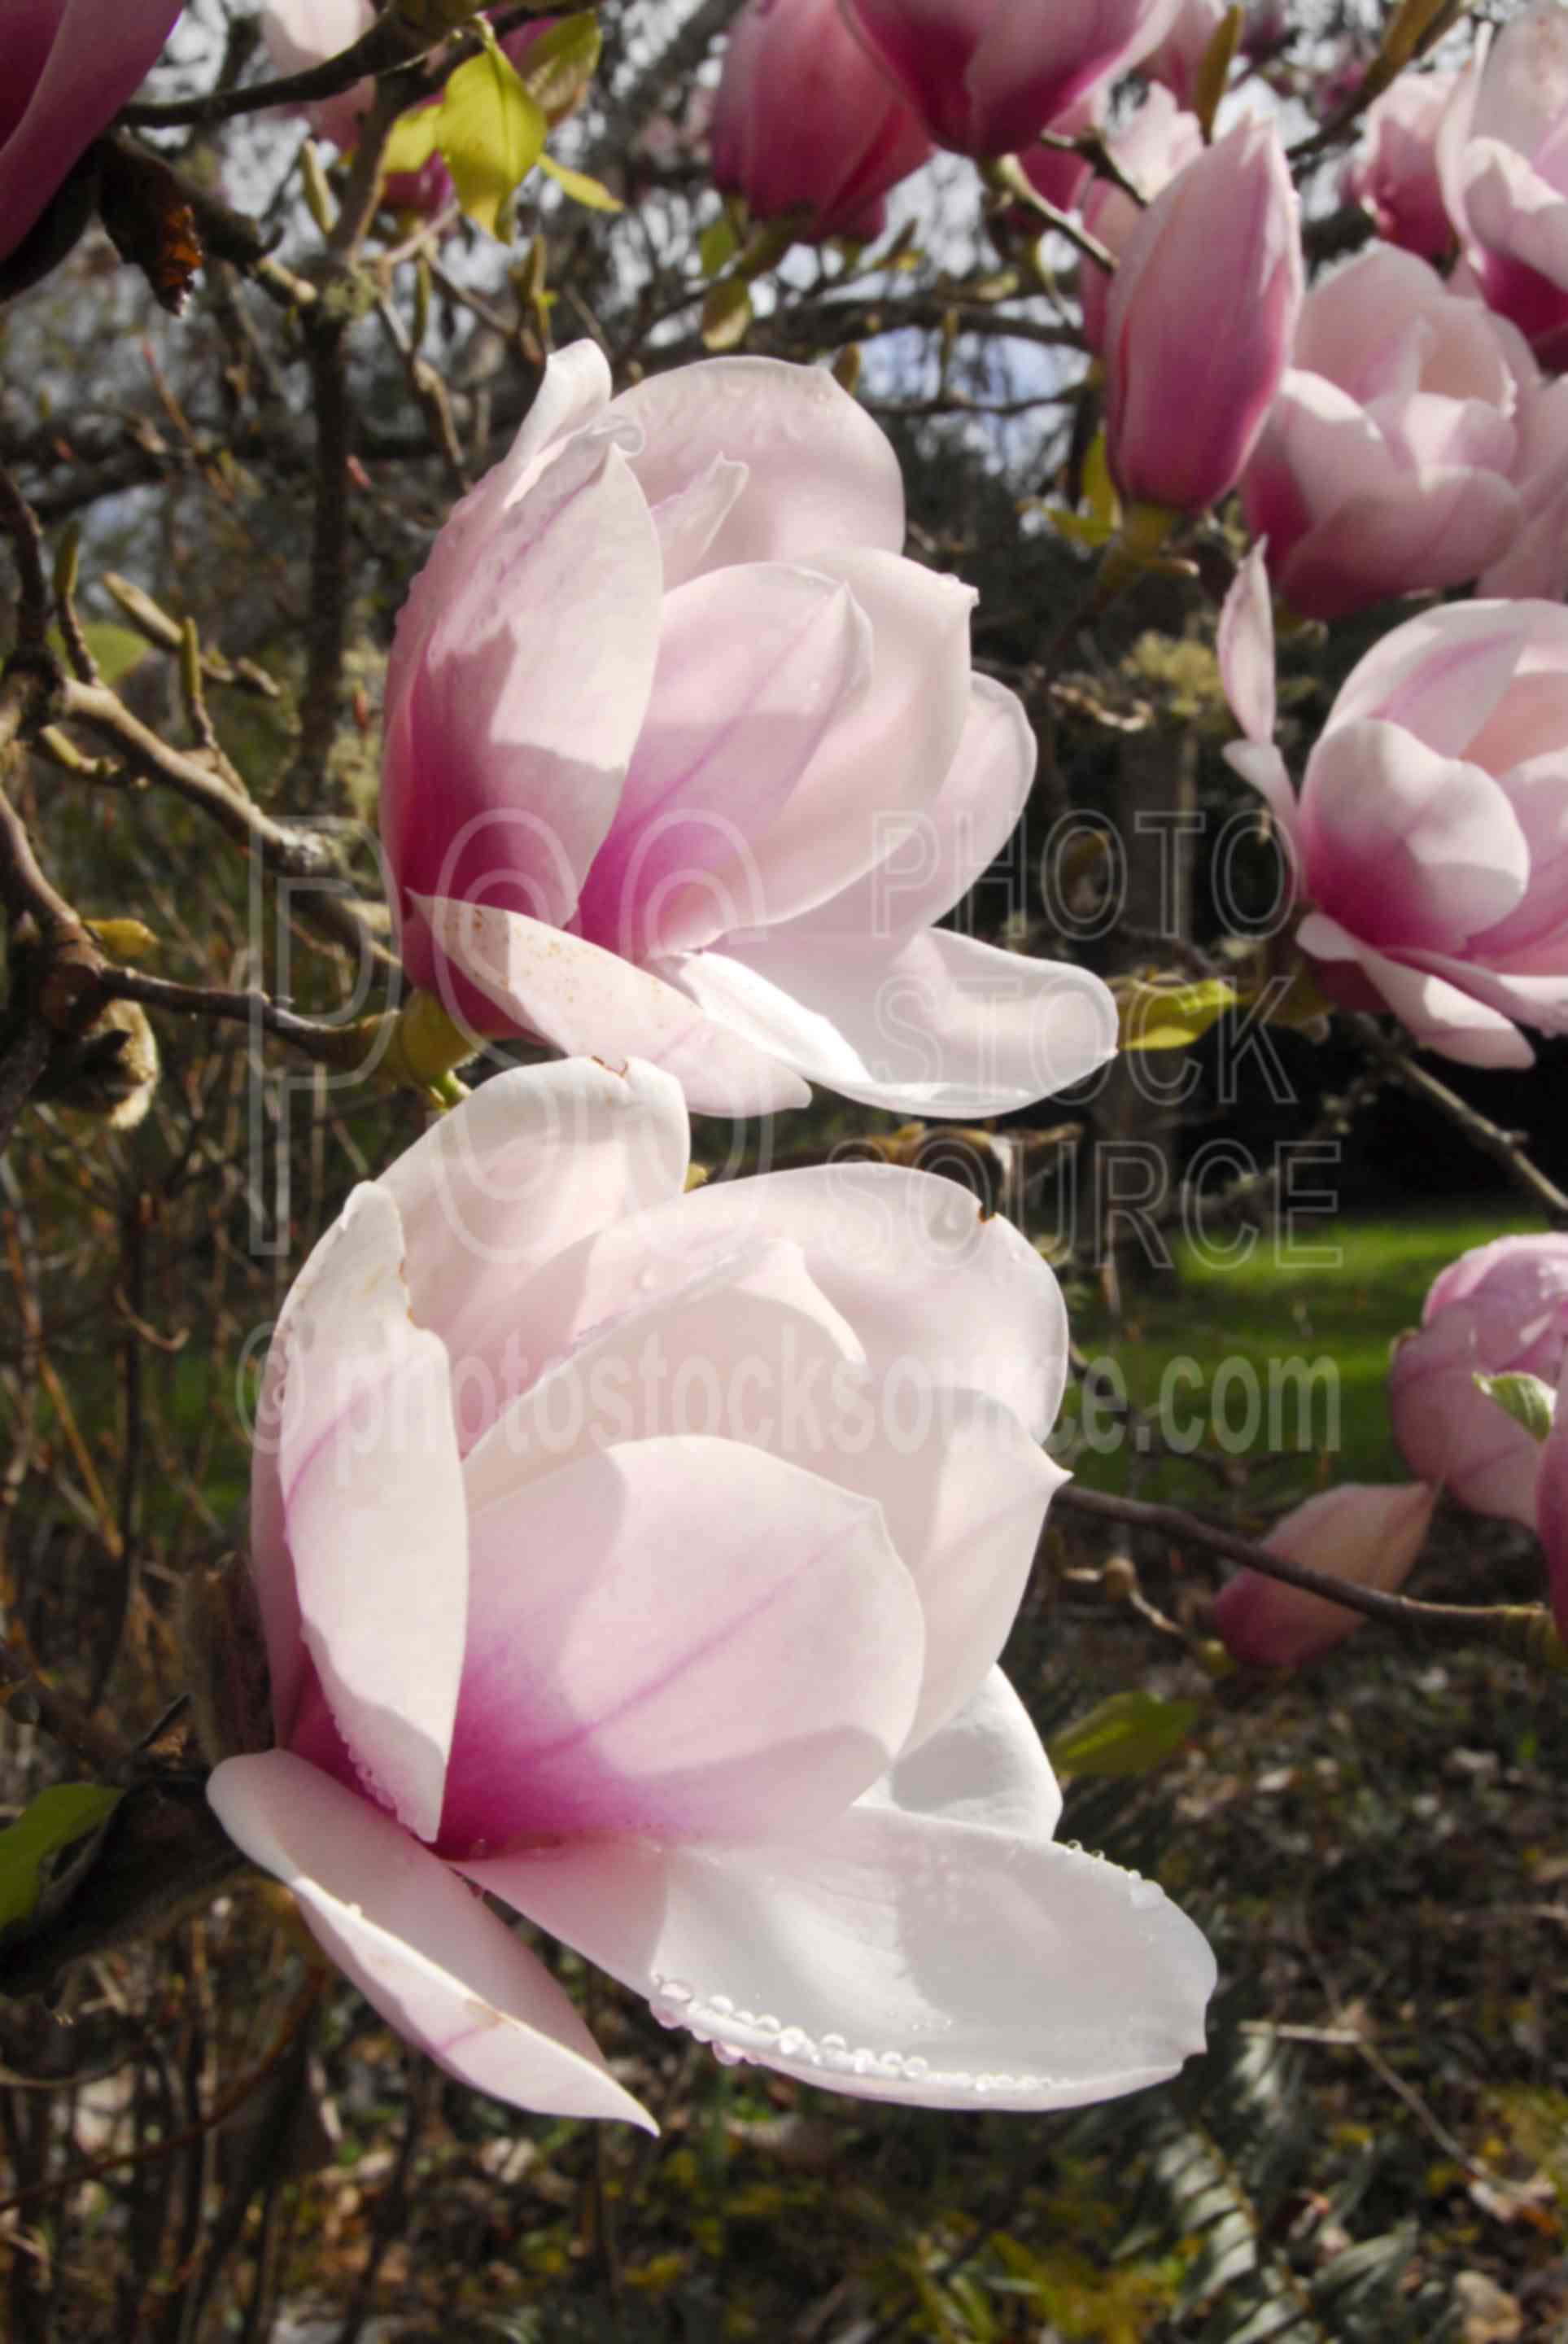 Grandiflora Magnolia Flowers,flower,tree,pink,fragrant,smell,bloom,magnolia,grandiflora,plants